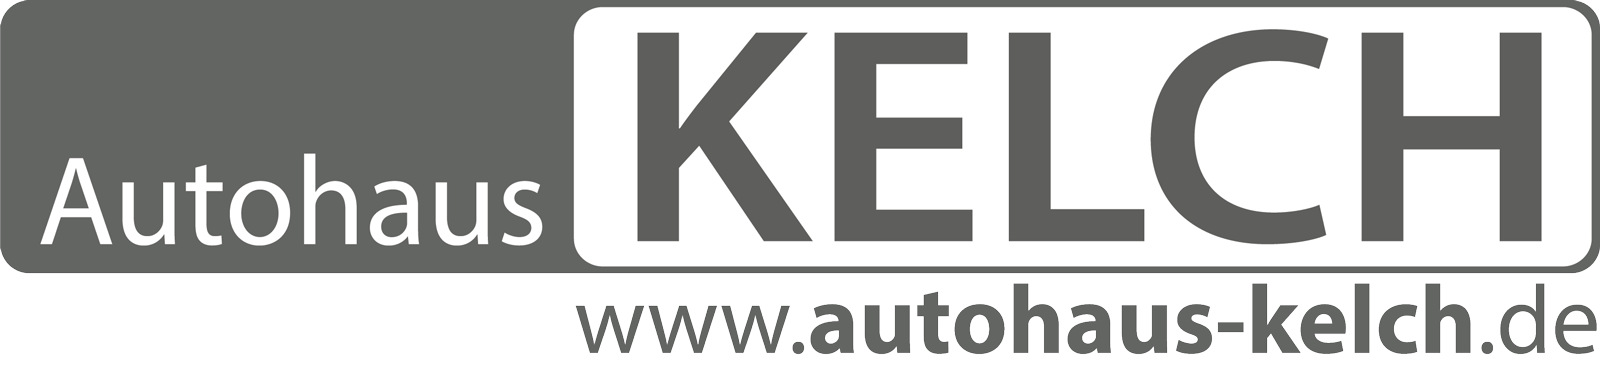 Autohaus Kelch GmbH & Co. KG